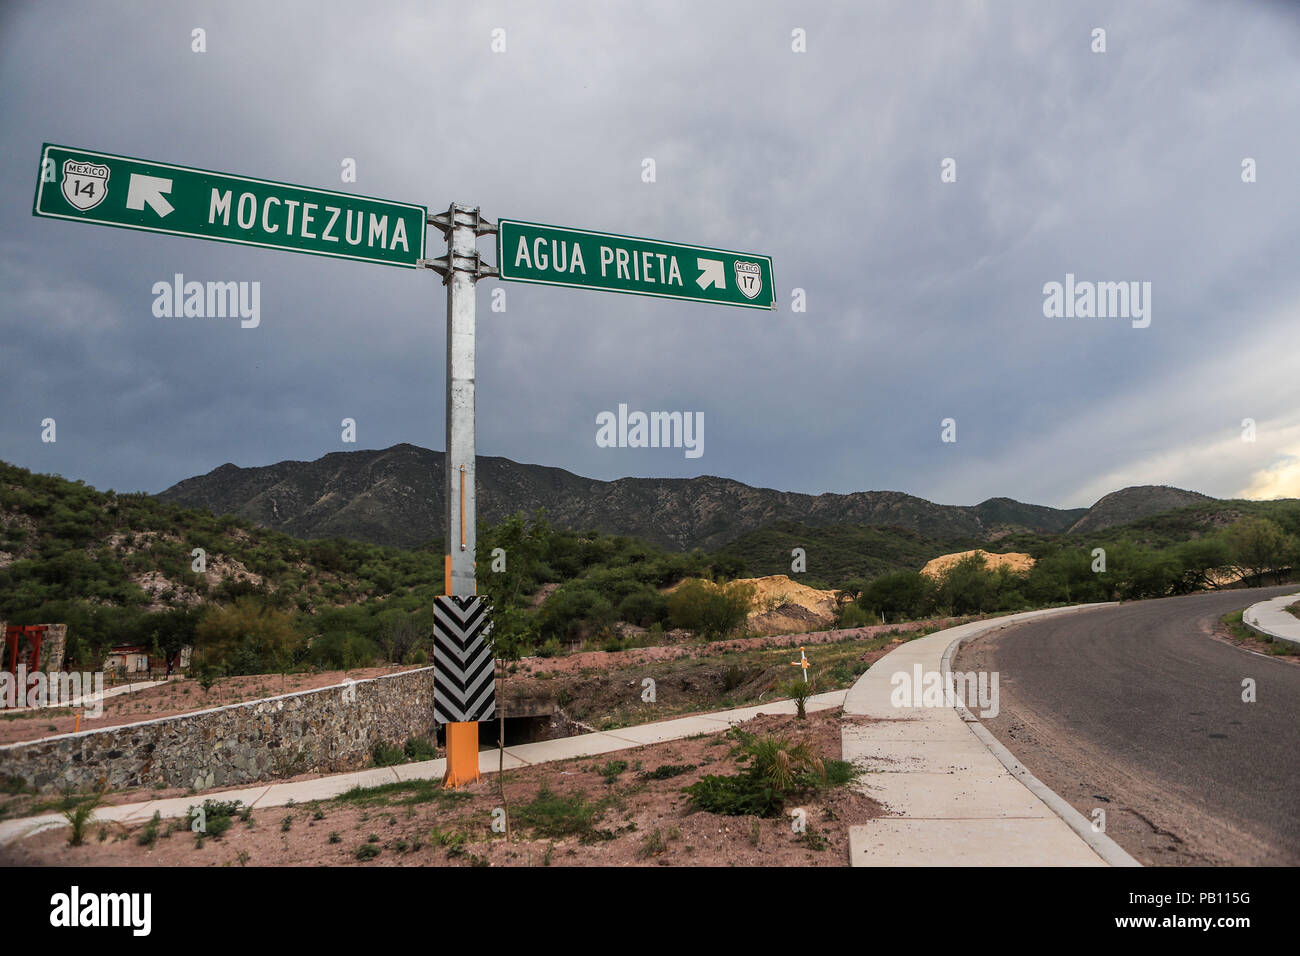 Señalizacion en carretera. Ruta a Agua Prieta y Ruta a Moctezuma en la carretera la intersección en Nacozari. Stock Photo